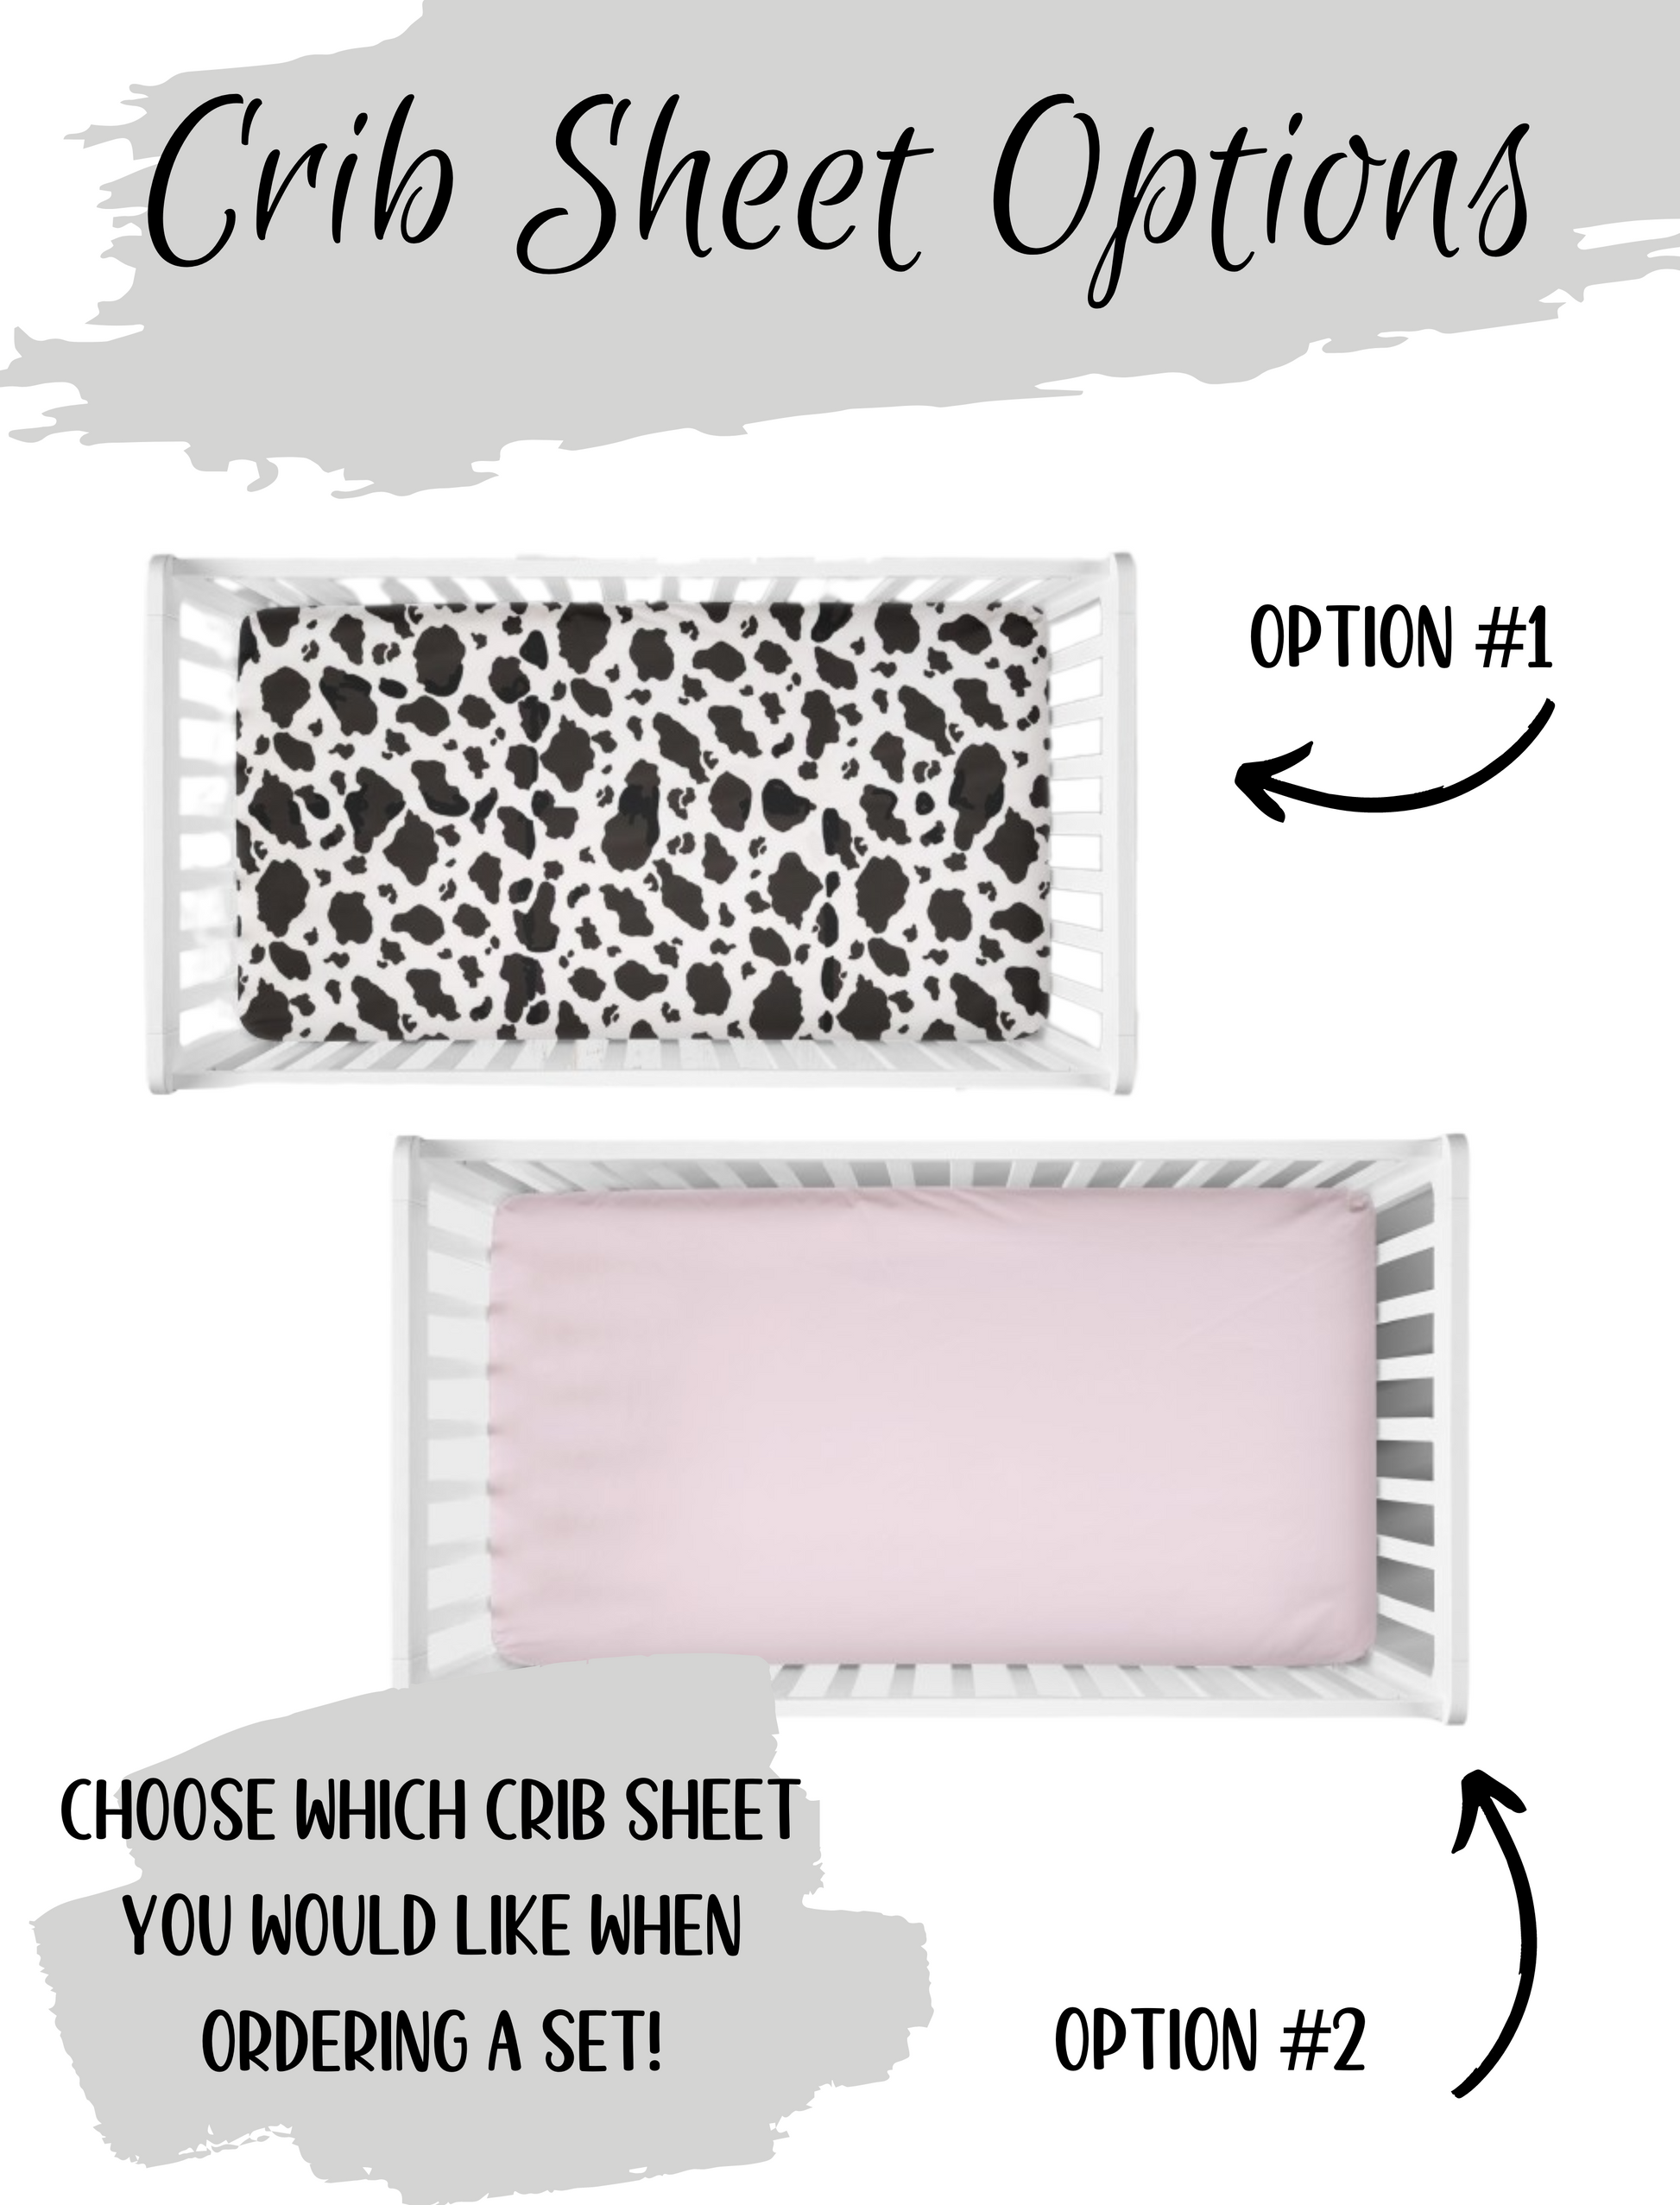 you pick your crib sheet - cow print sheet or light pink sheet 